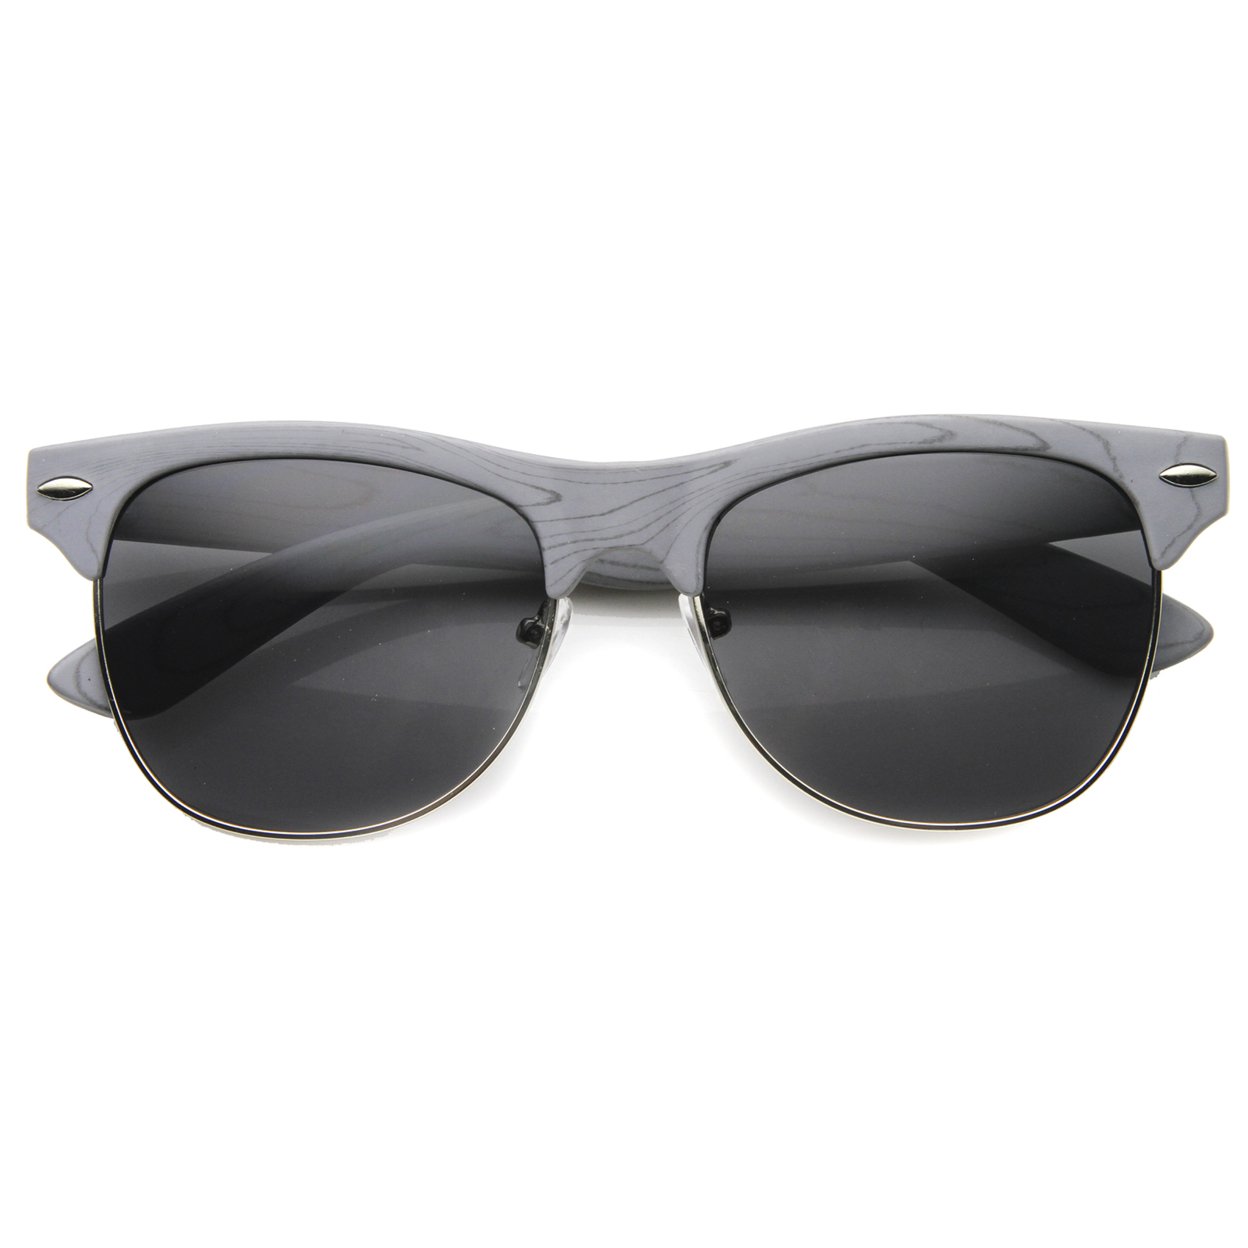 Mens Semi-Rimless Sunglasses With UV400 Protected Composite Lens 9959 - Black / Smoke